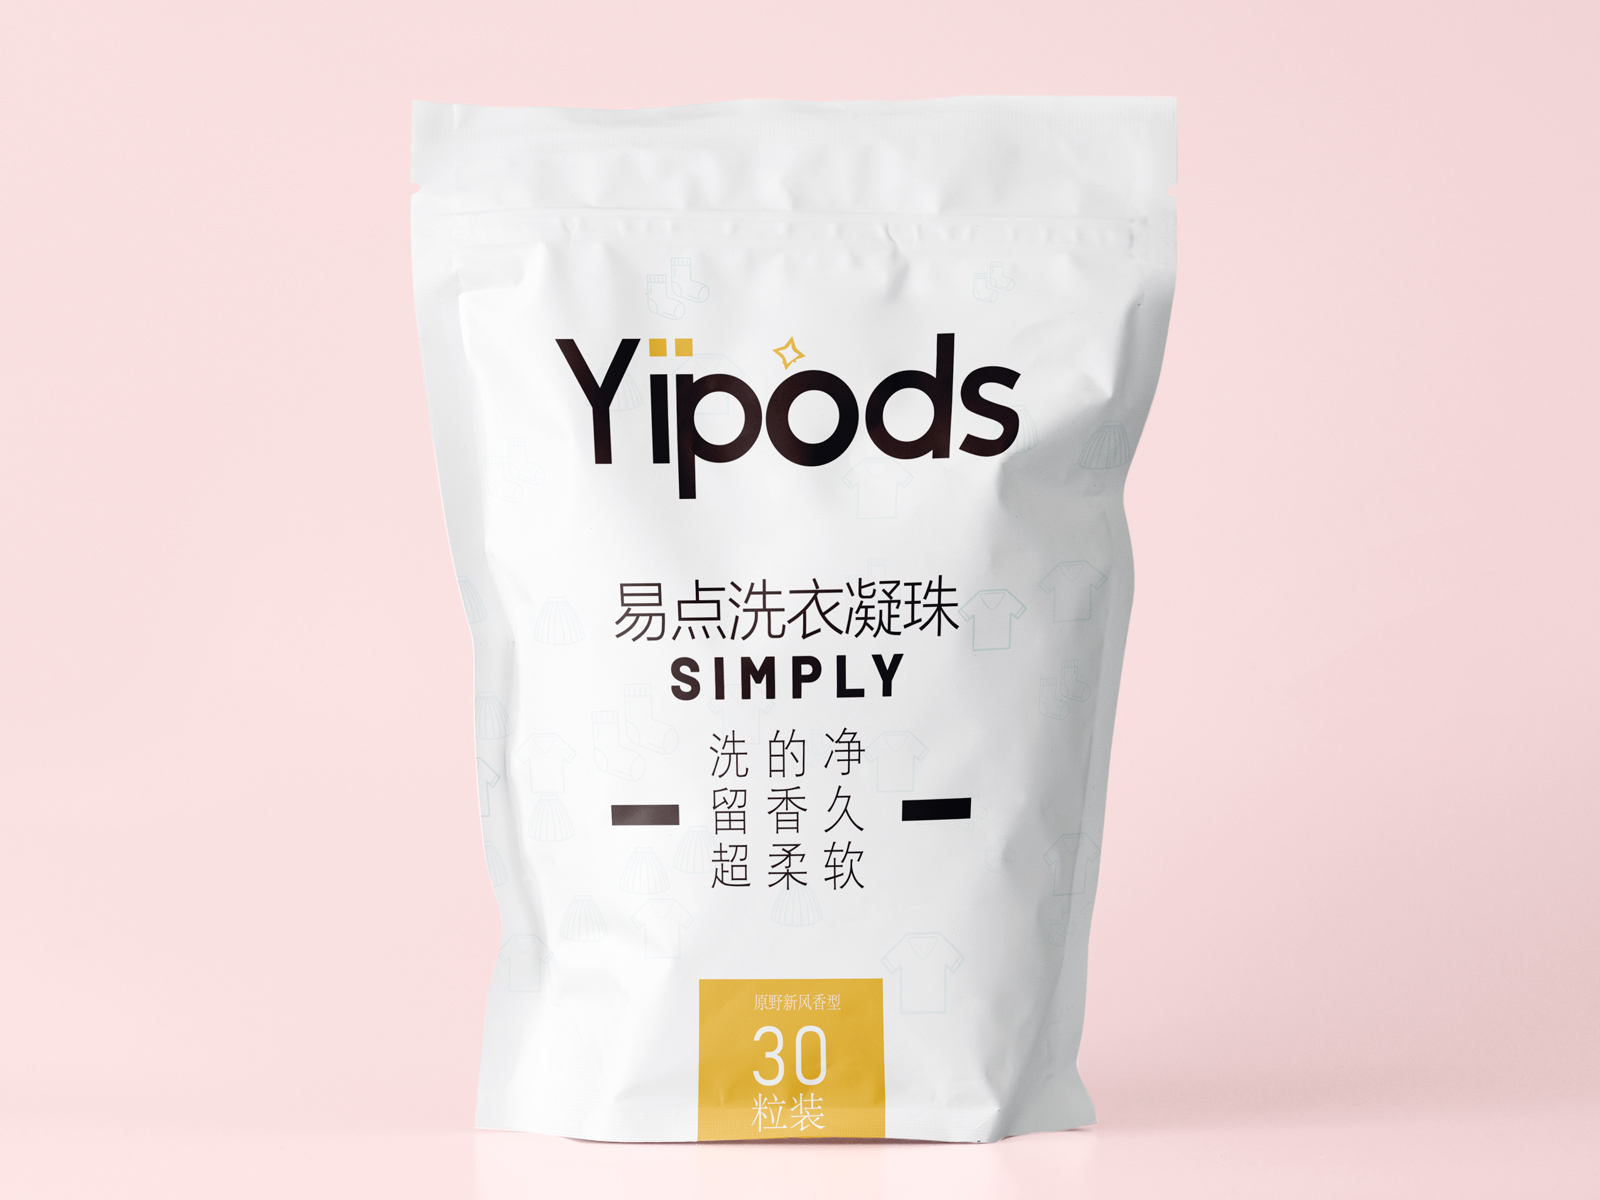 yipods brand laundry pods zipper bag plastic bag